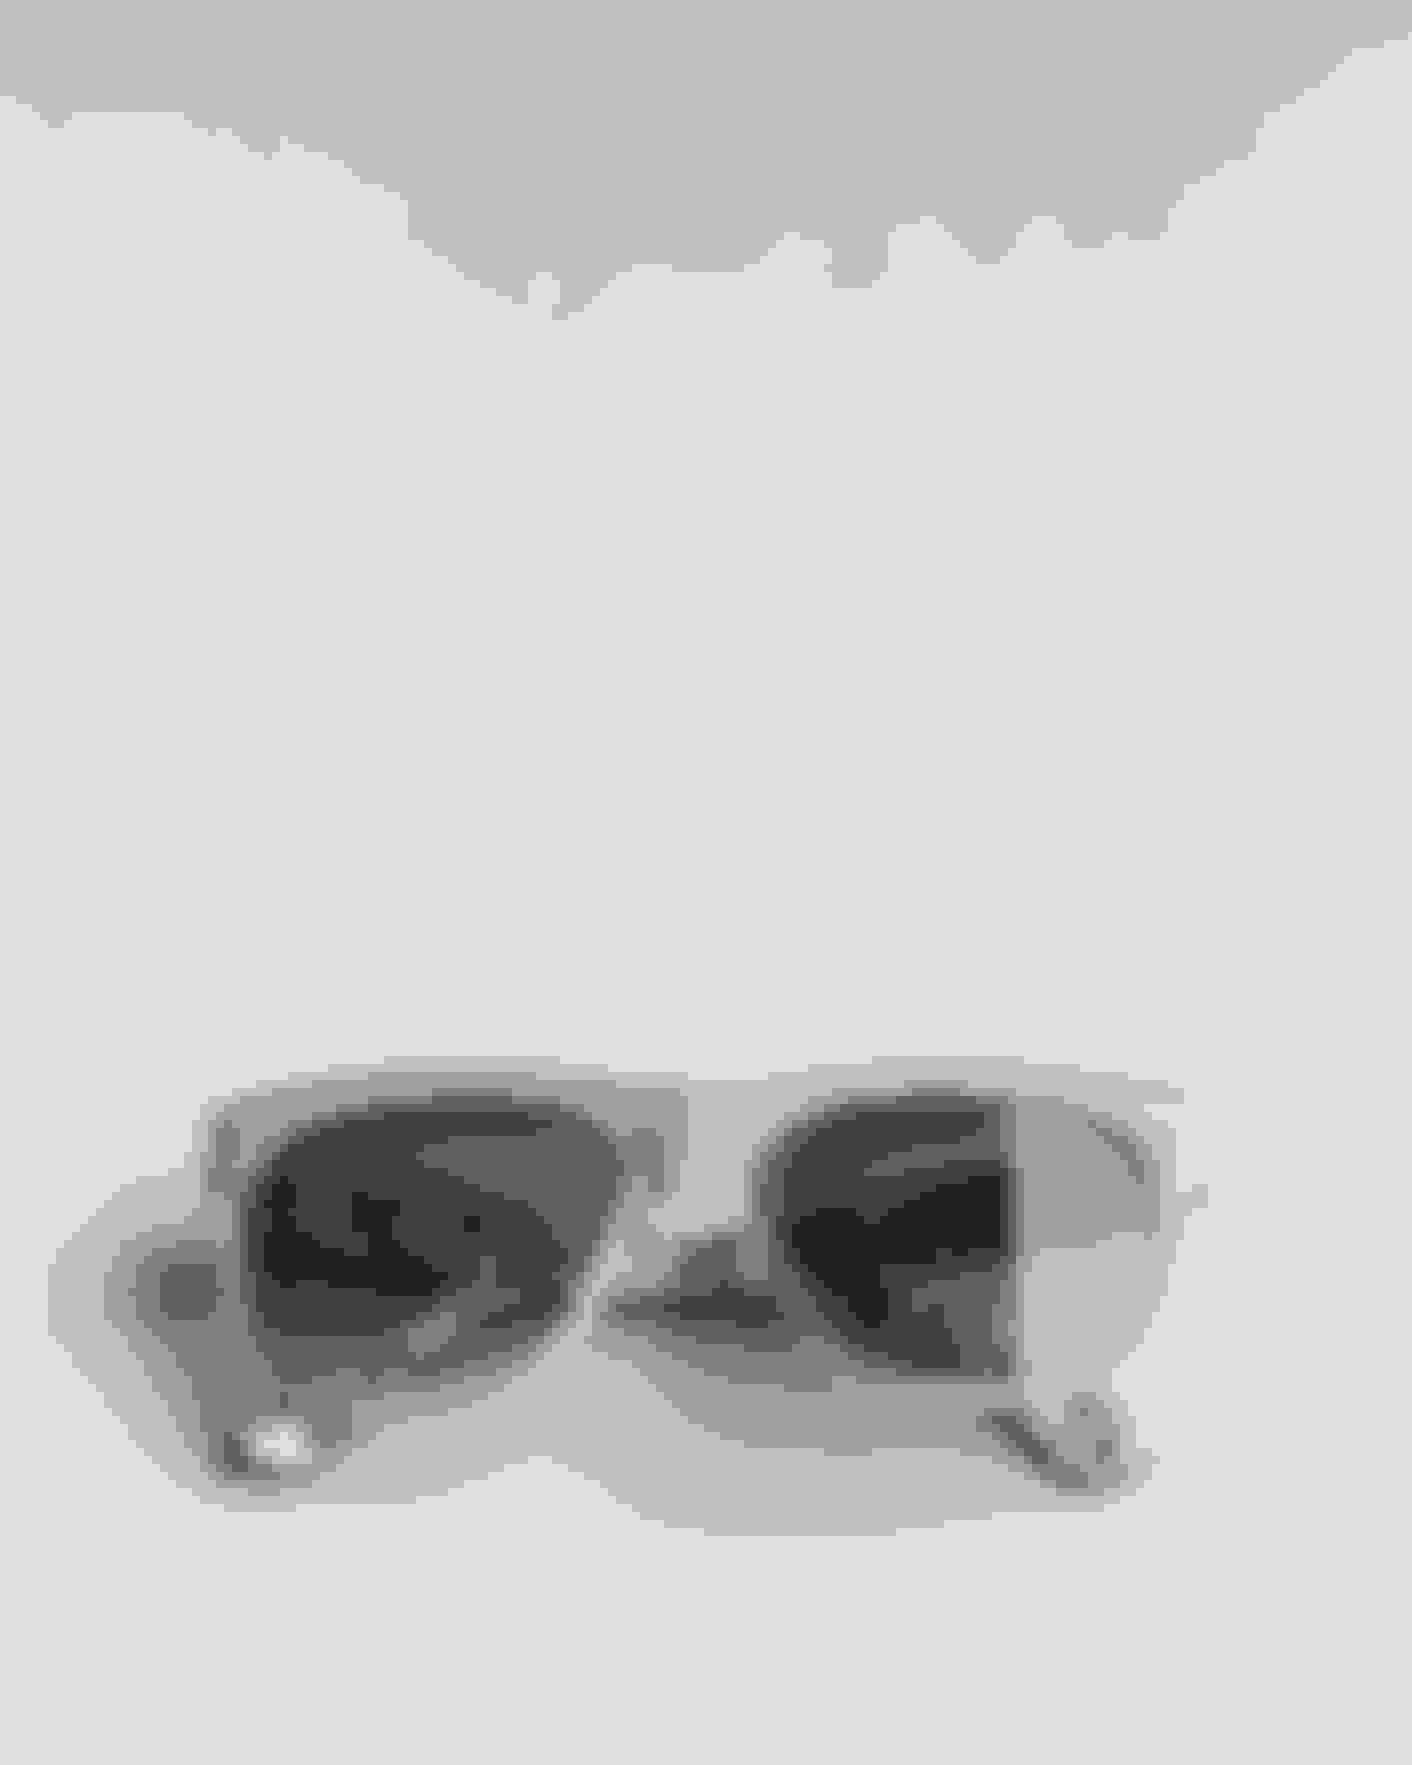 Grey MIB Printed Sunglasses Ted Baker